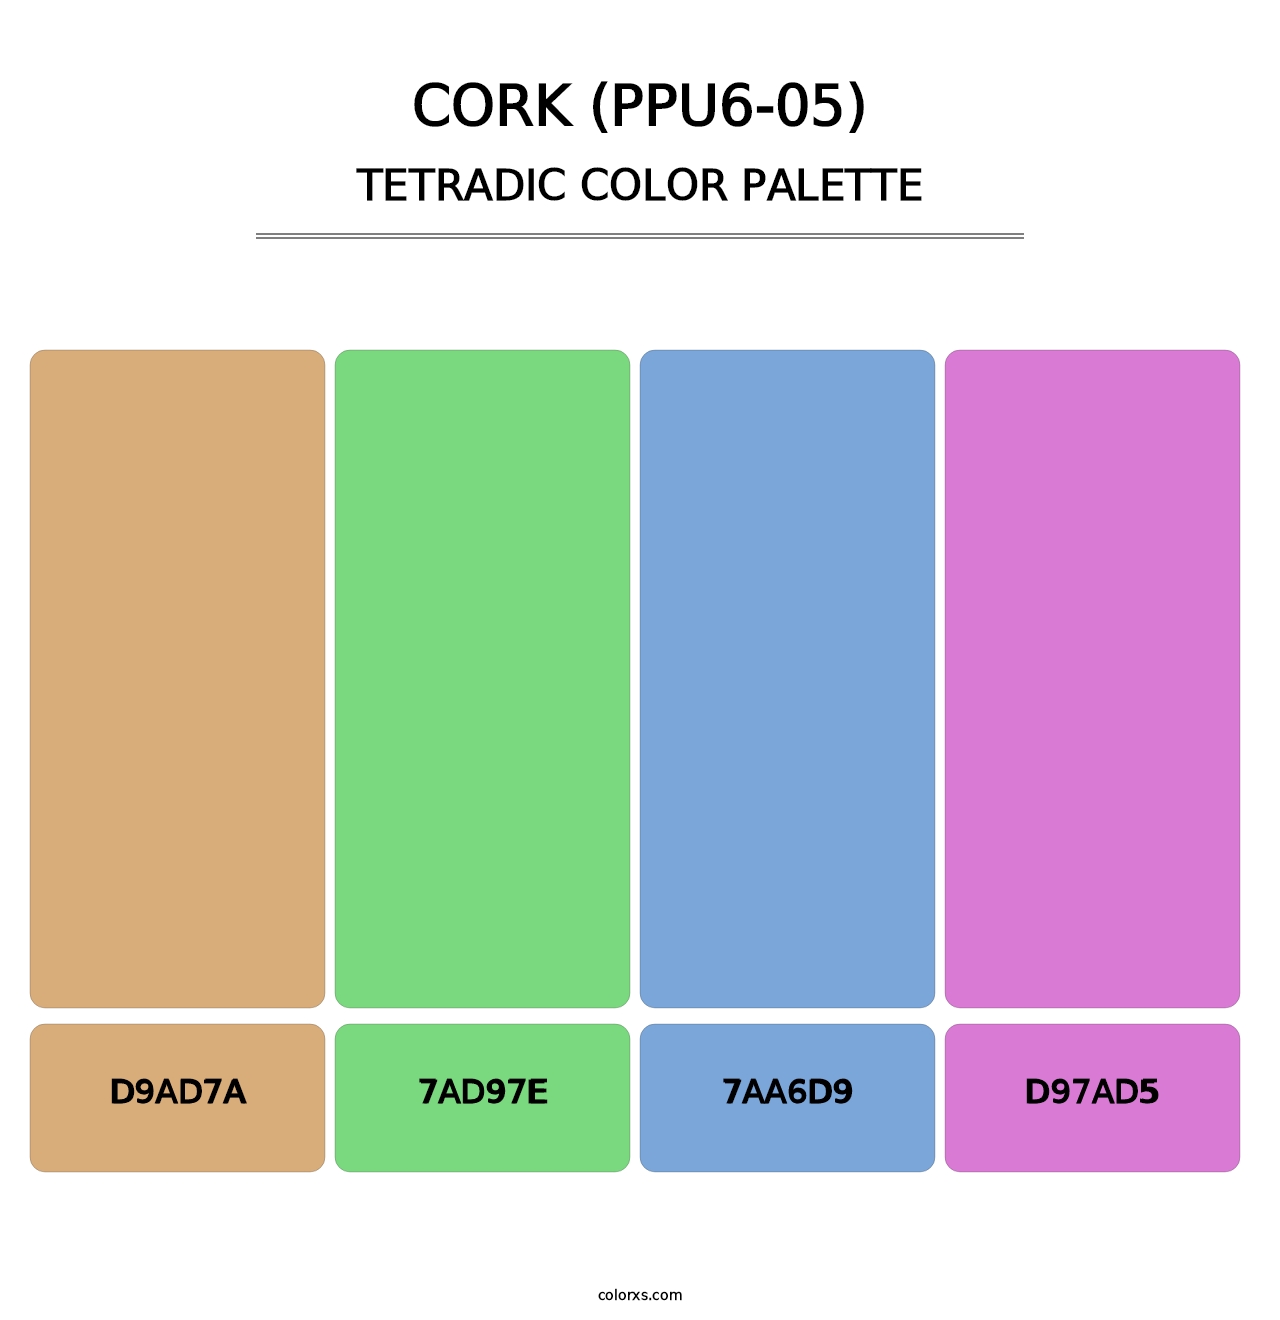 Cork (PPU6-05) - Tetradic Color Palette